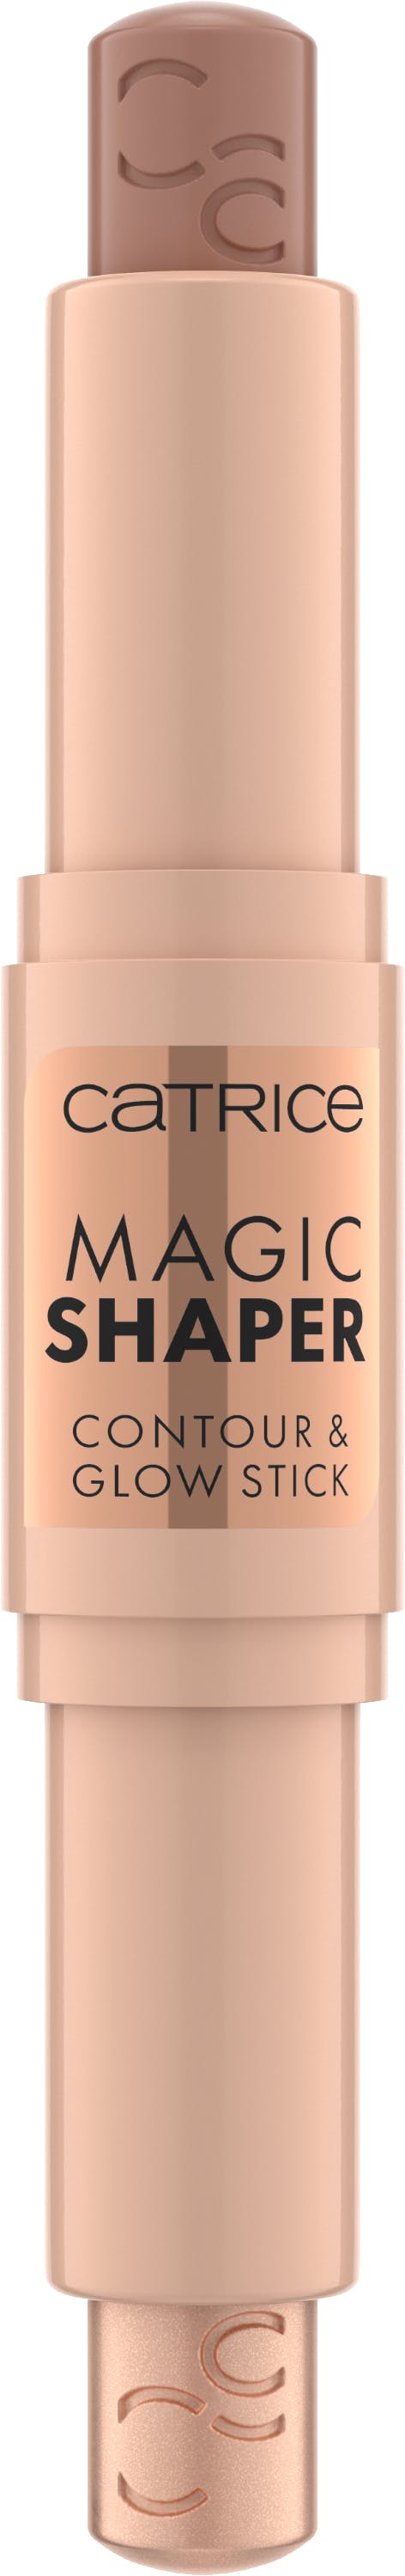 Catrice Magic Shaper Contour & Glow Stick 010